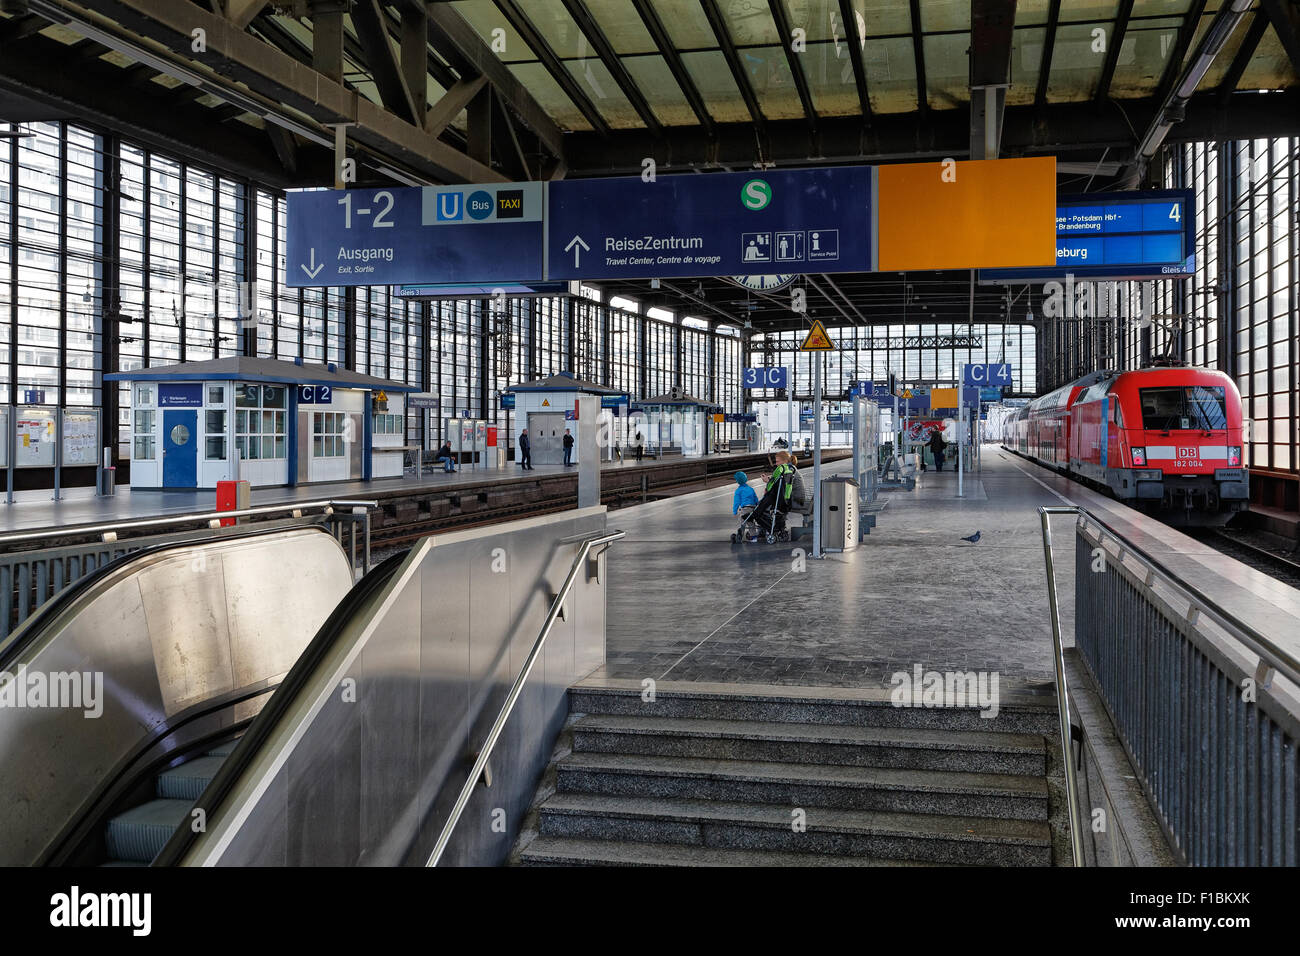 berlin-germany-the-platform-at-the-zoo-train-station-F1BKXK.jpg